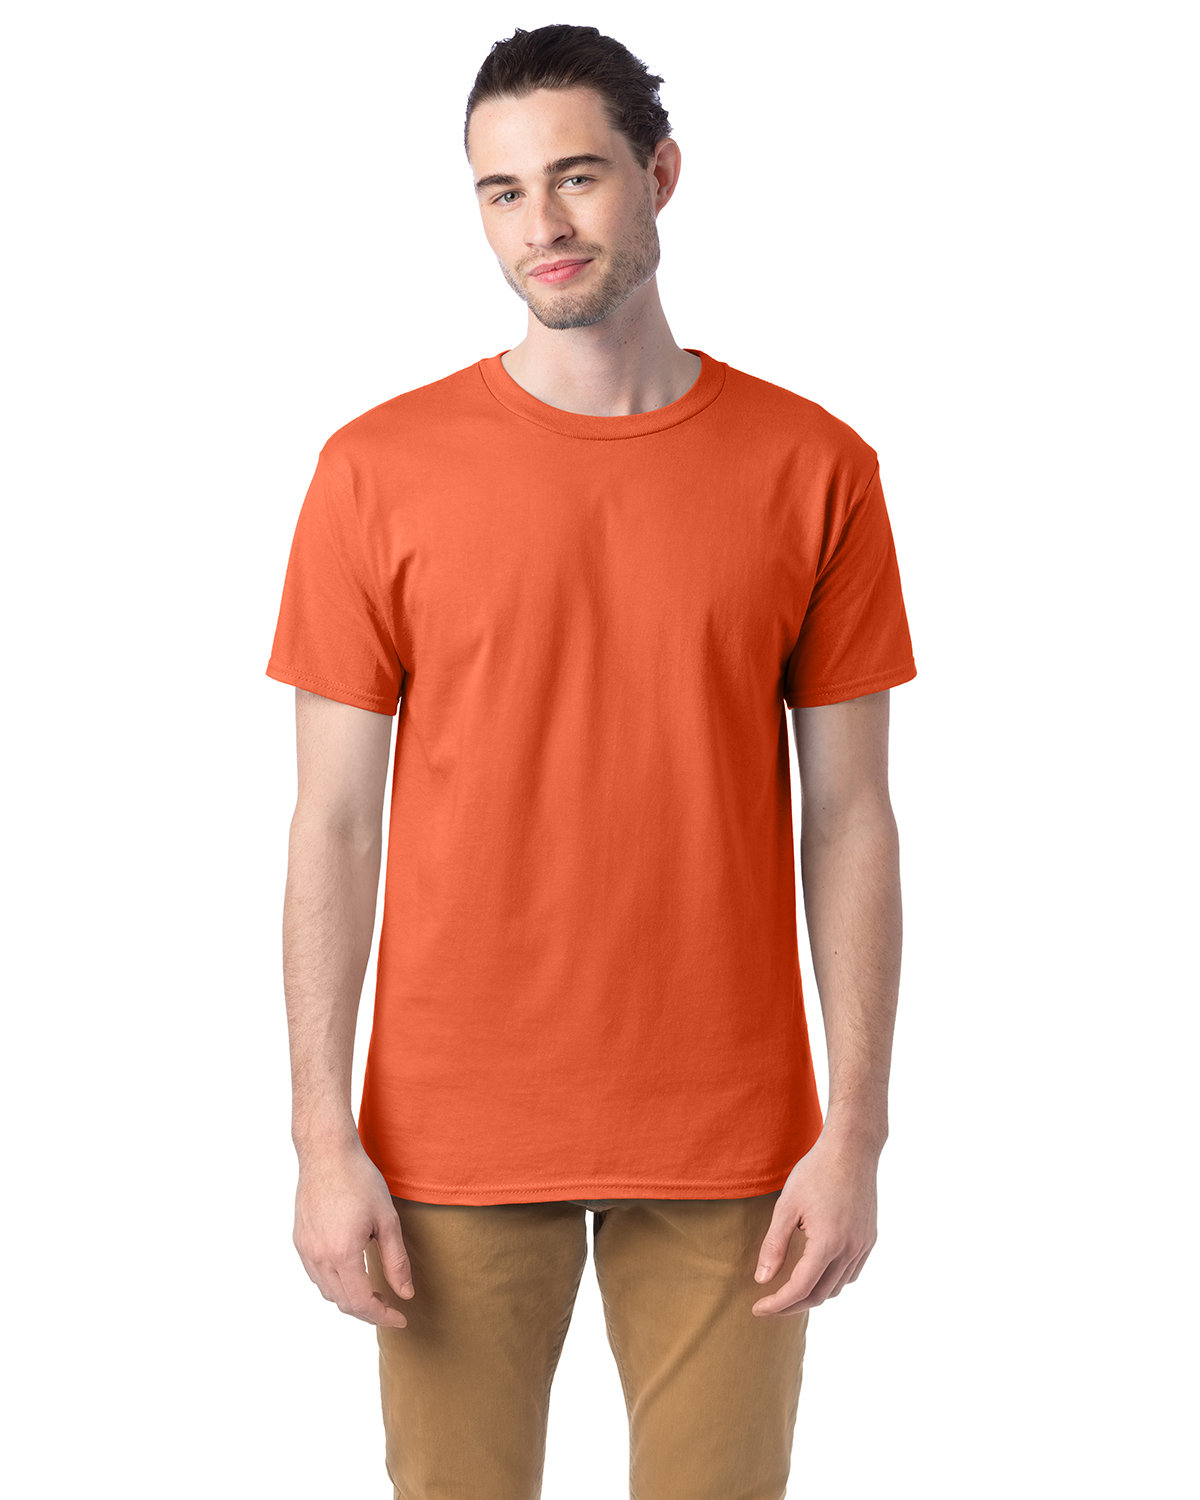 Hanes Adult Essential Short Sleeve T-Shirt texas orange 